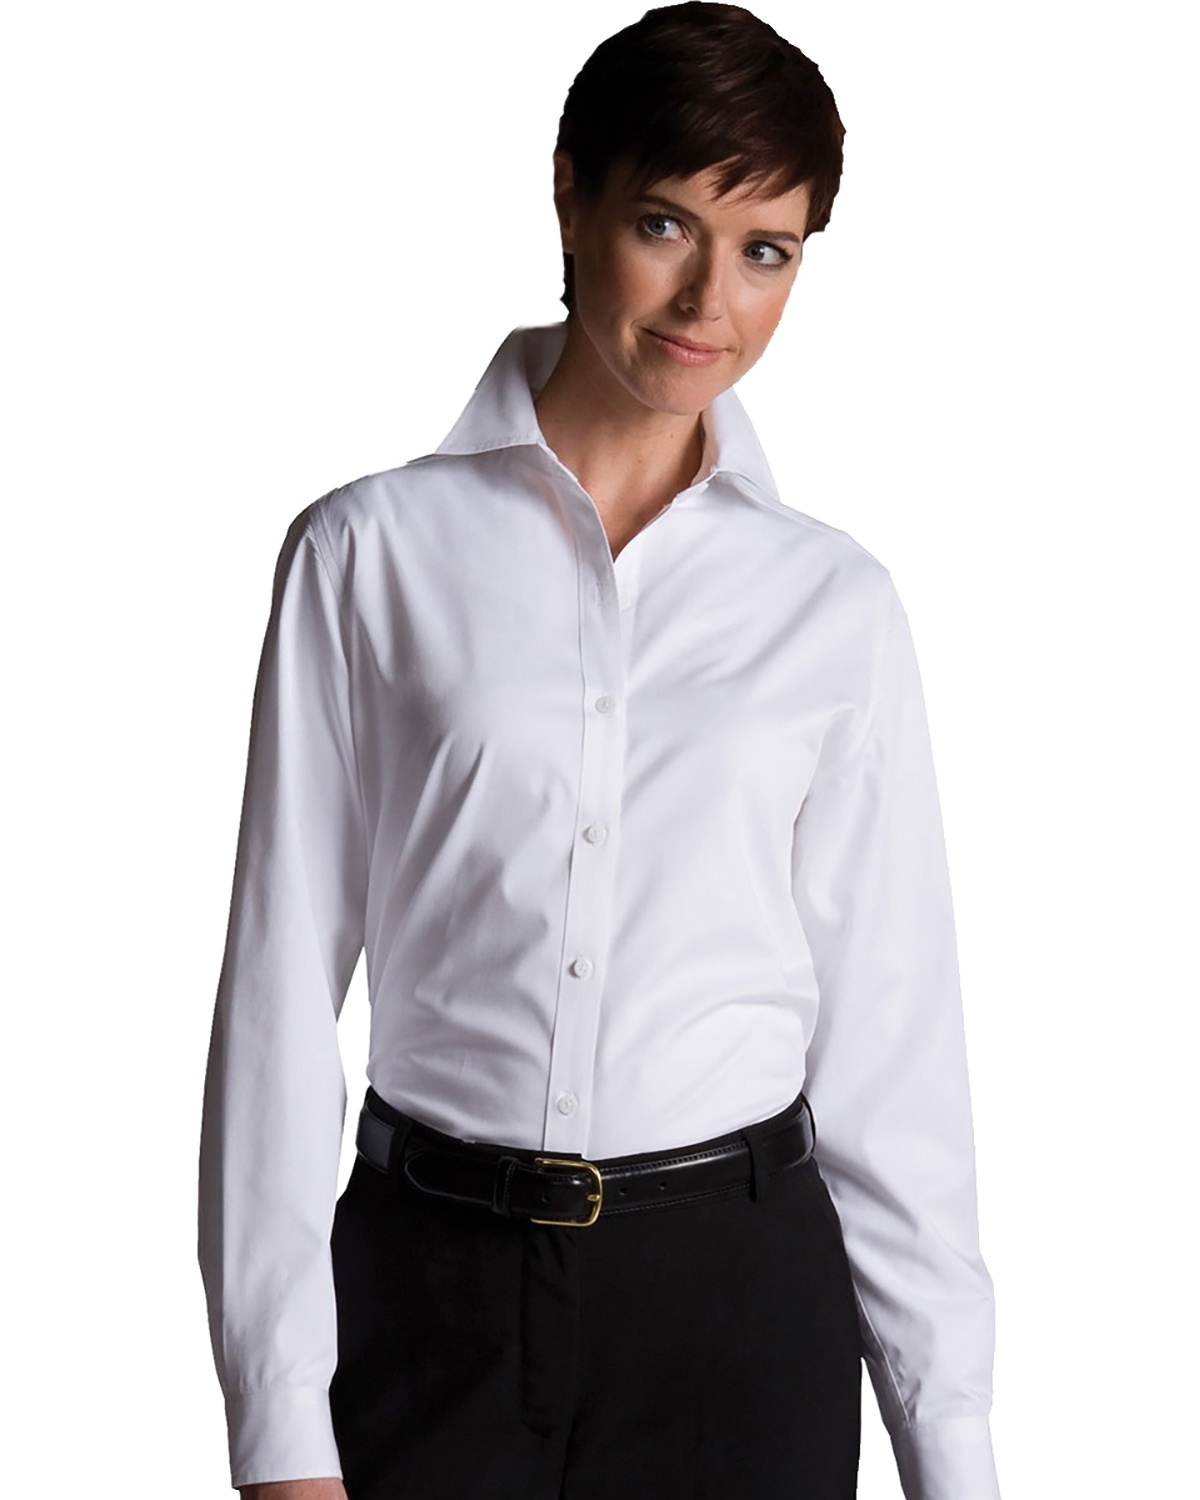 'Edwards 5750 Ladies Cottonplus Long Sleeve Twill Shirt'